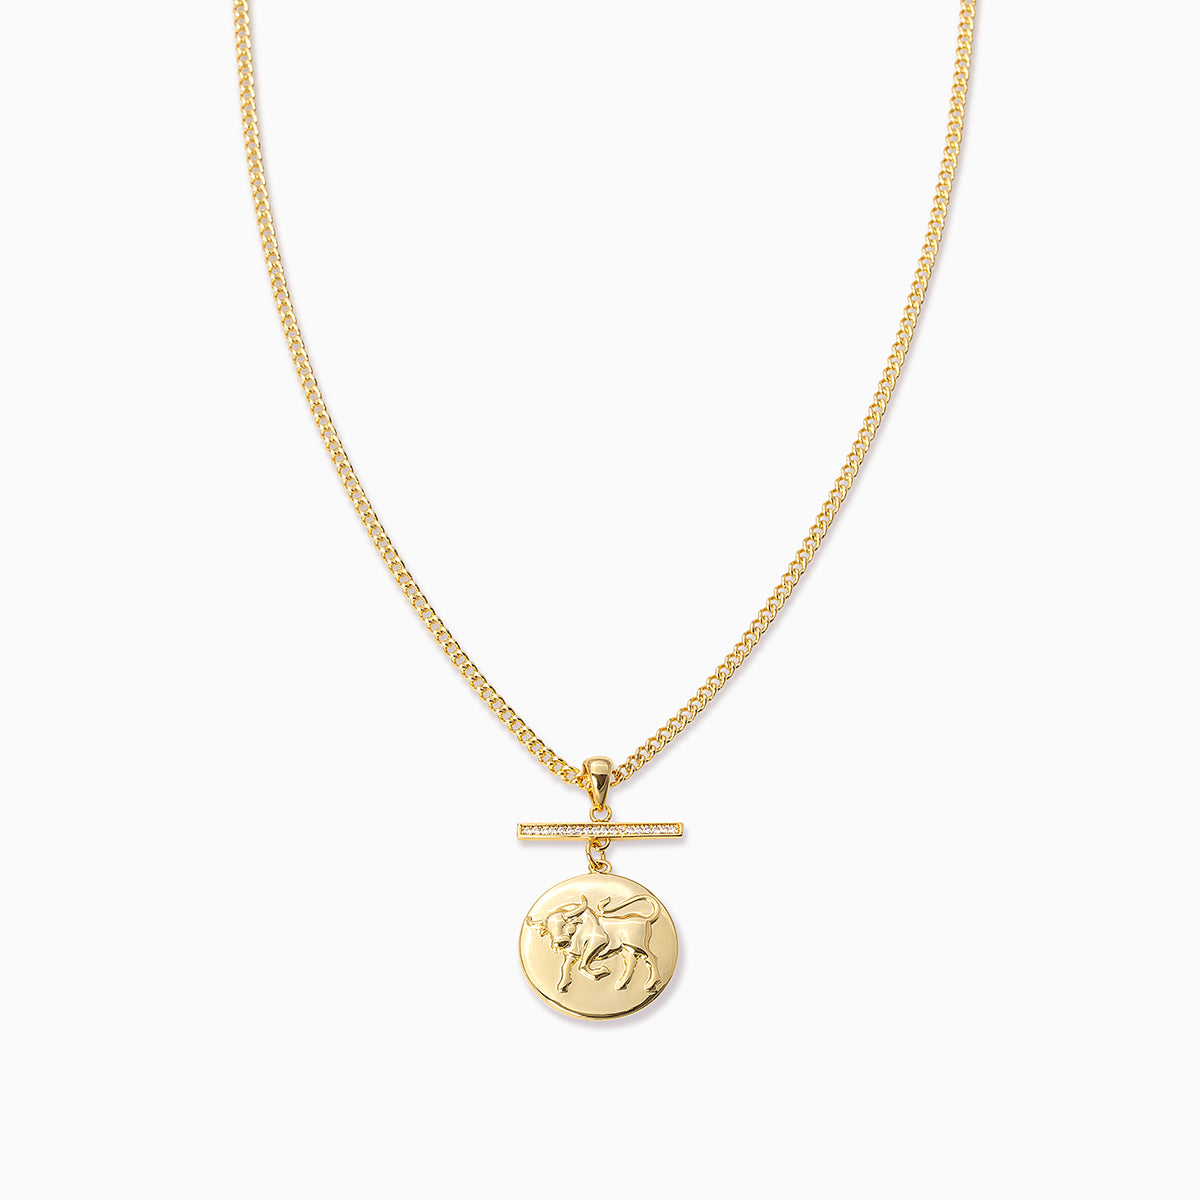 Zodiac Pendant Necklace | Taurus | Product Image | Uncommon James